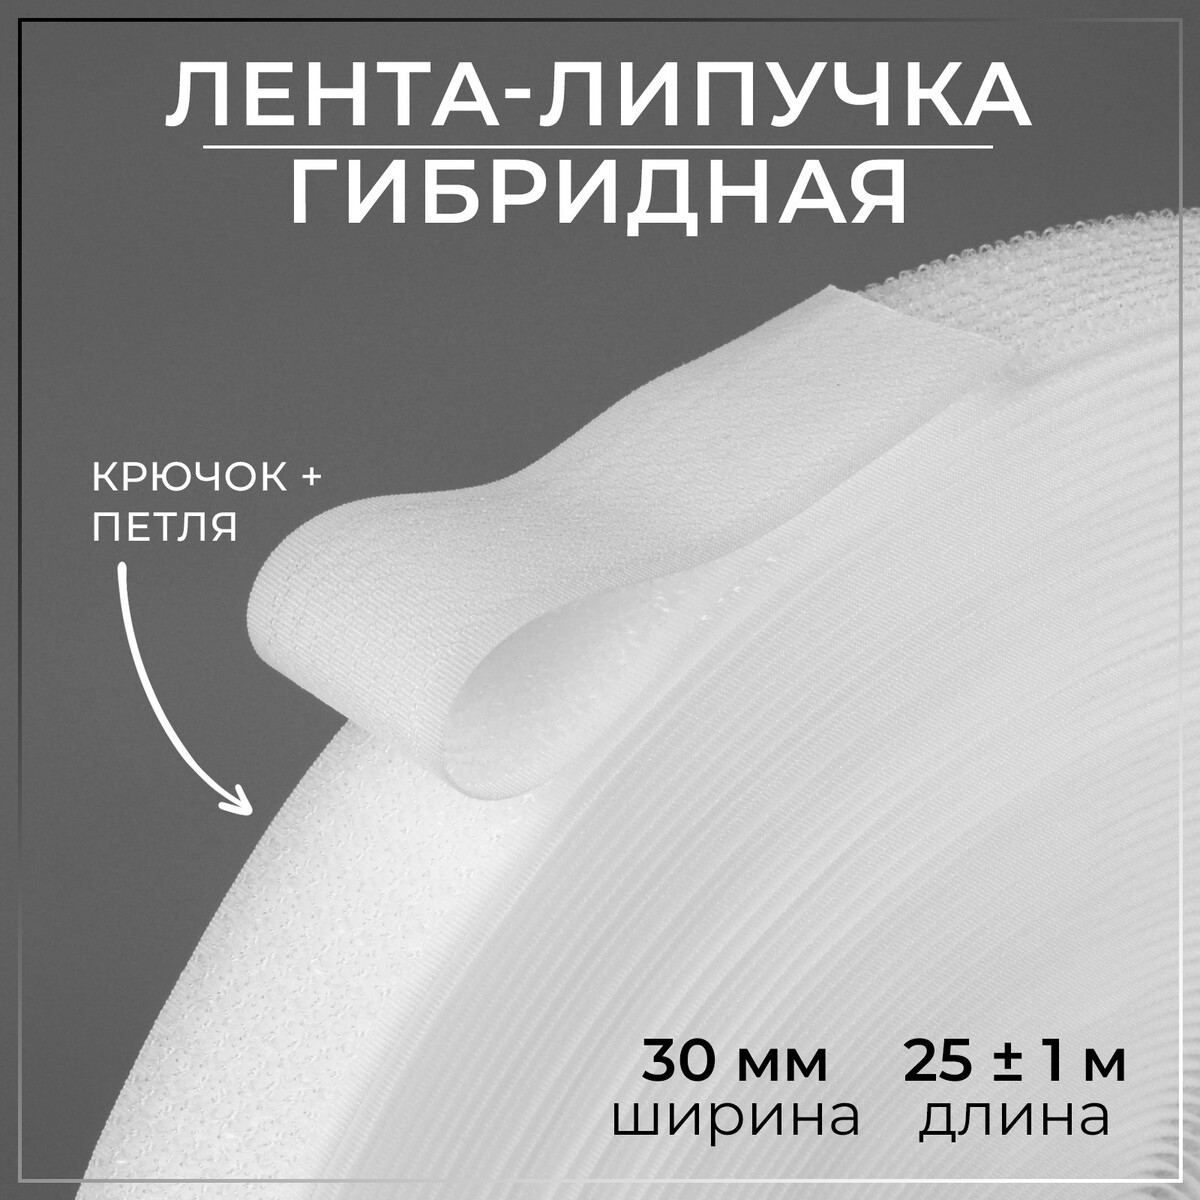 Липучка гибридная, 30 мм × 25 ± 1 м, цвет белый липучка 30 мм × 25 ± 1 м